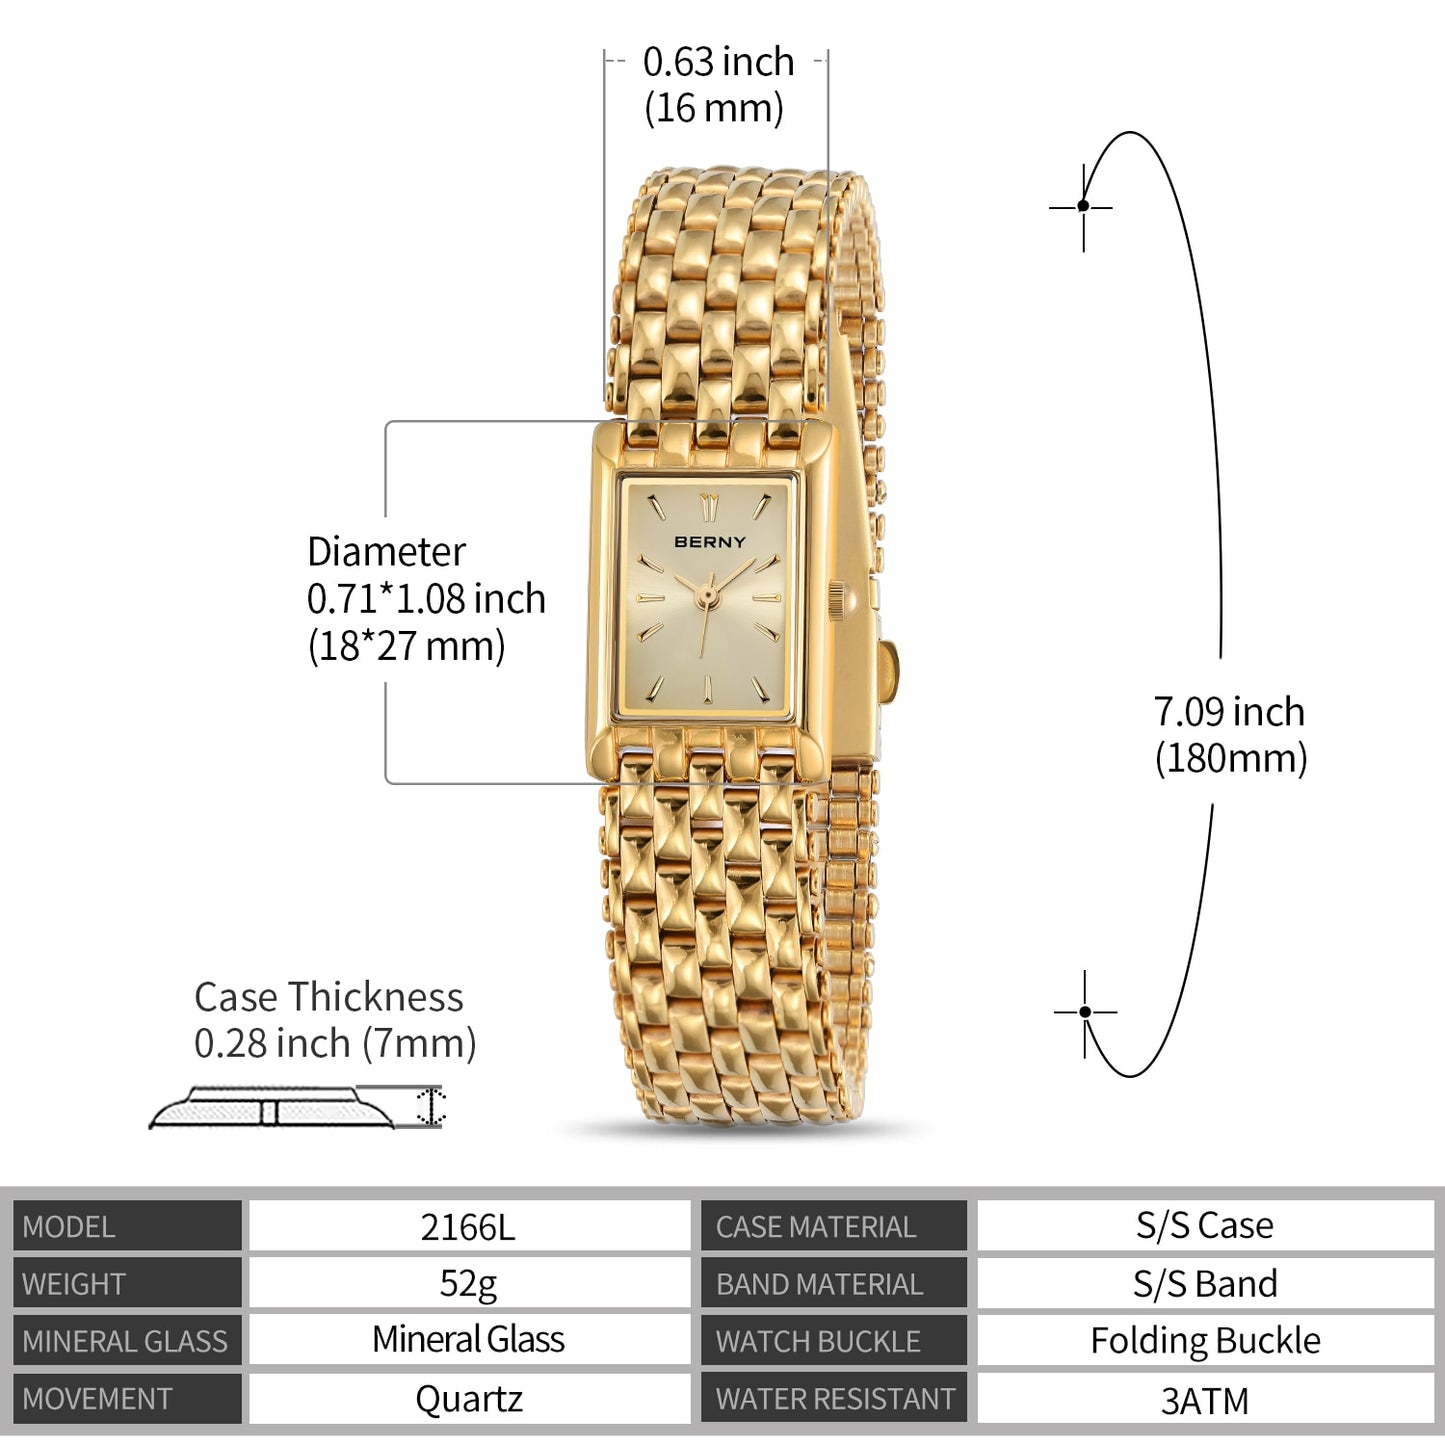 BERNY 女士手表有不同表面颜色可供选择。防水金色女不锈钢